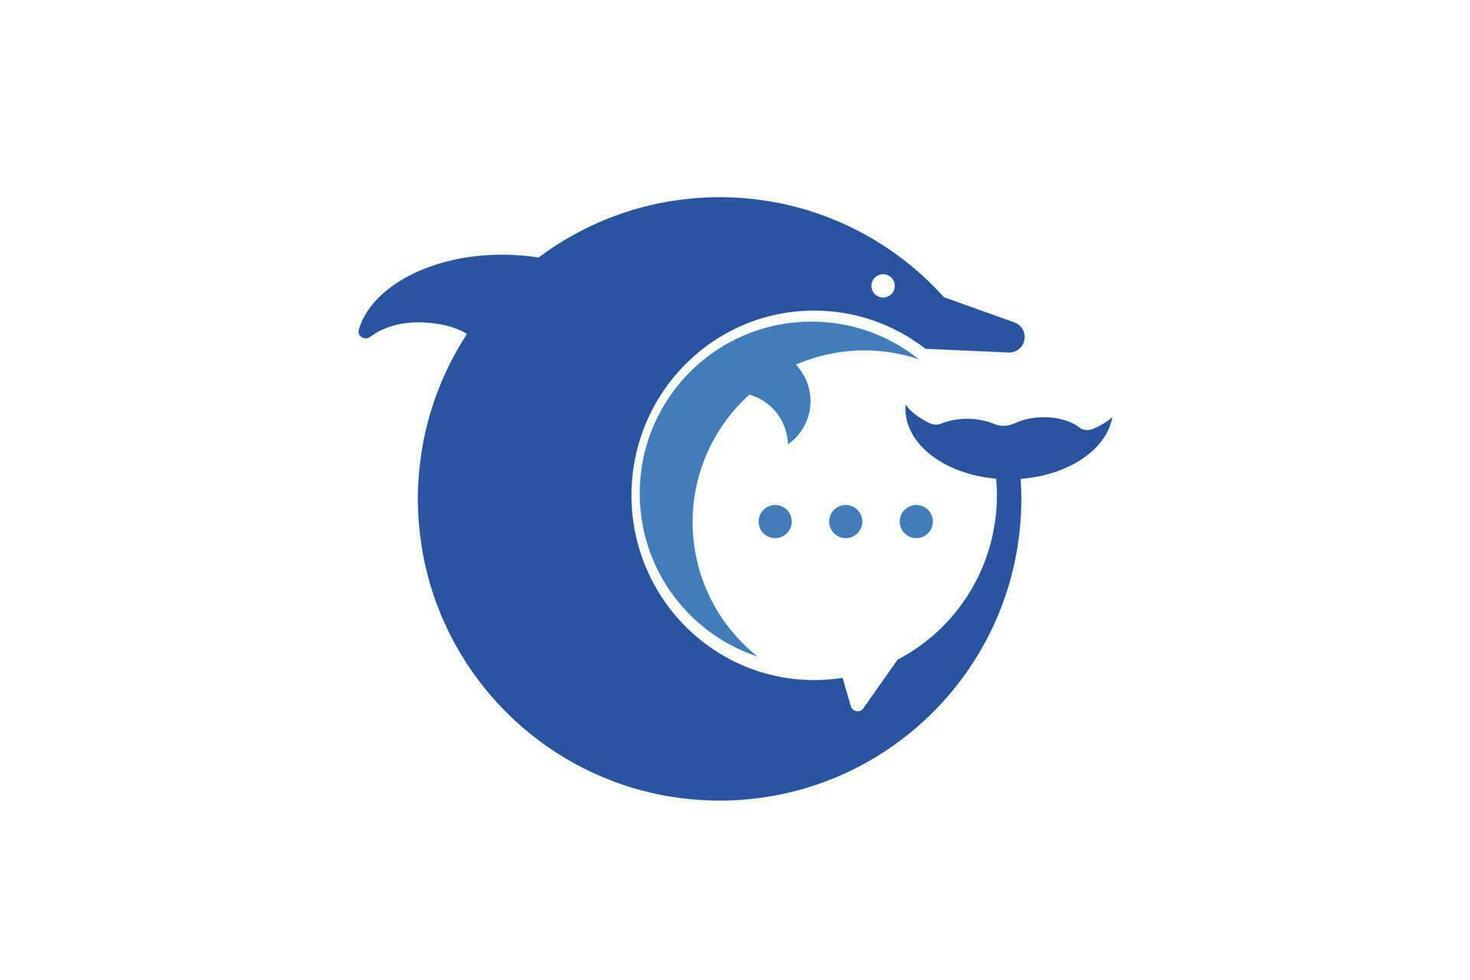 de cirkel blå delfin runt om de bubbla prata logotyp design vektor